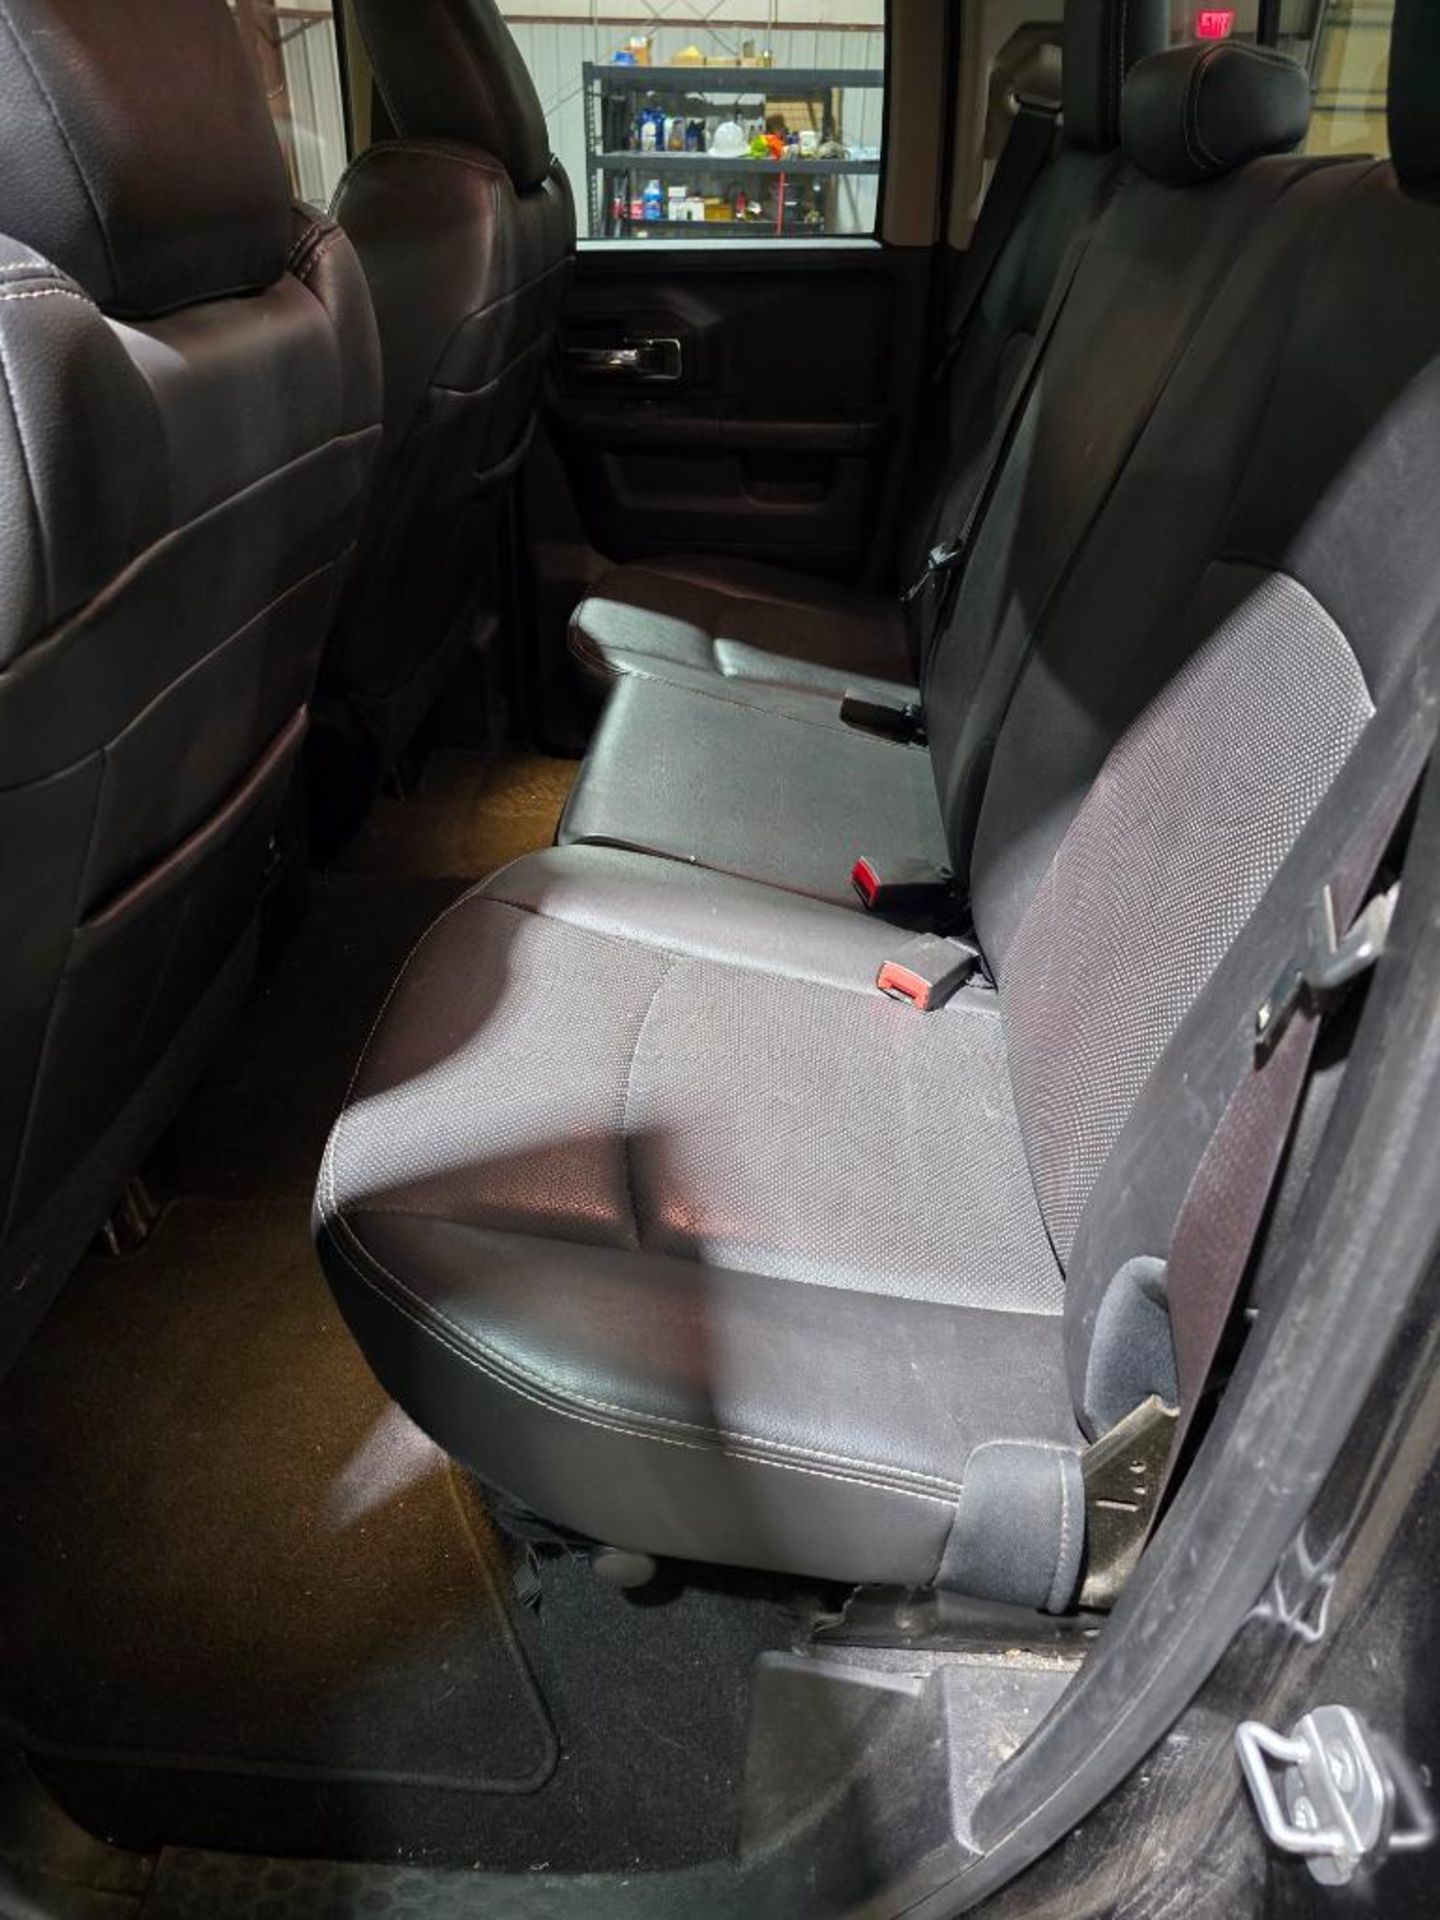 2016 Dodge Ram 1500 Truck, Crew Cab, Leather Interior, Power Seats/Windows, 6,800 GVWR, Running Boar - Image 18 of 18